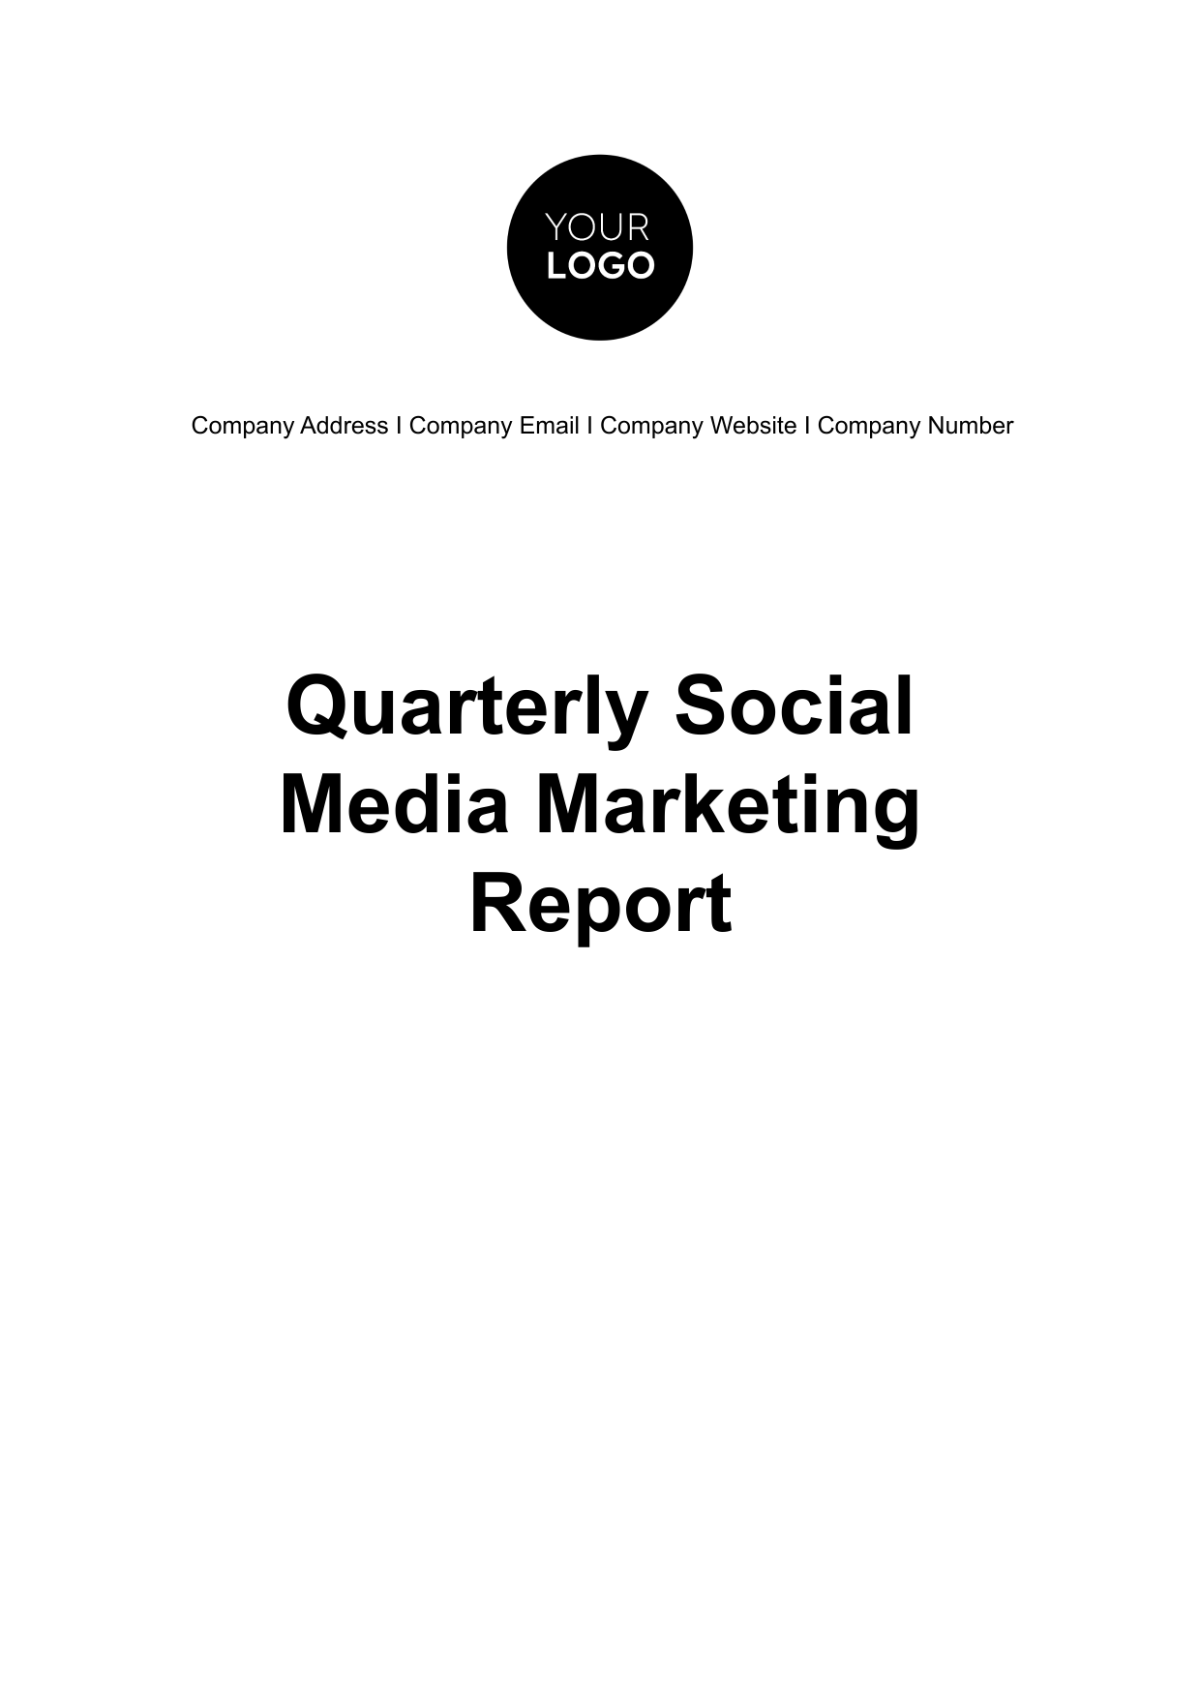 Quarterly Social Media Marketing Report Template